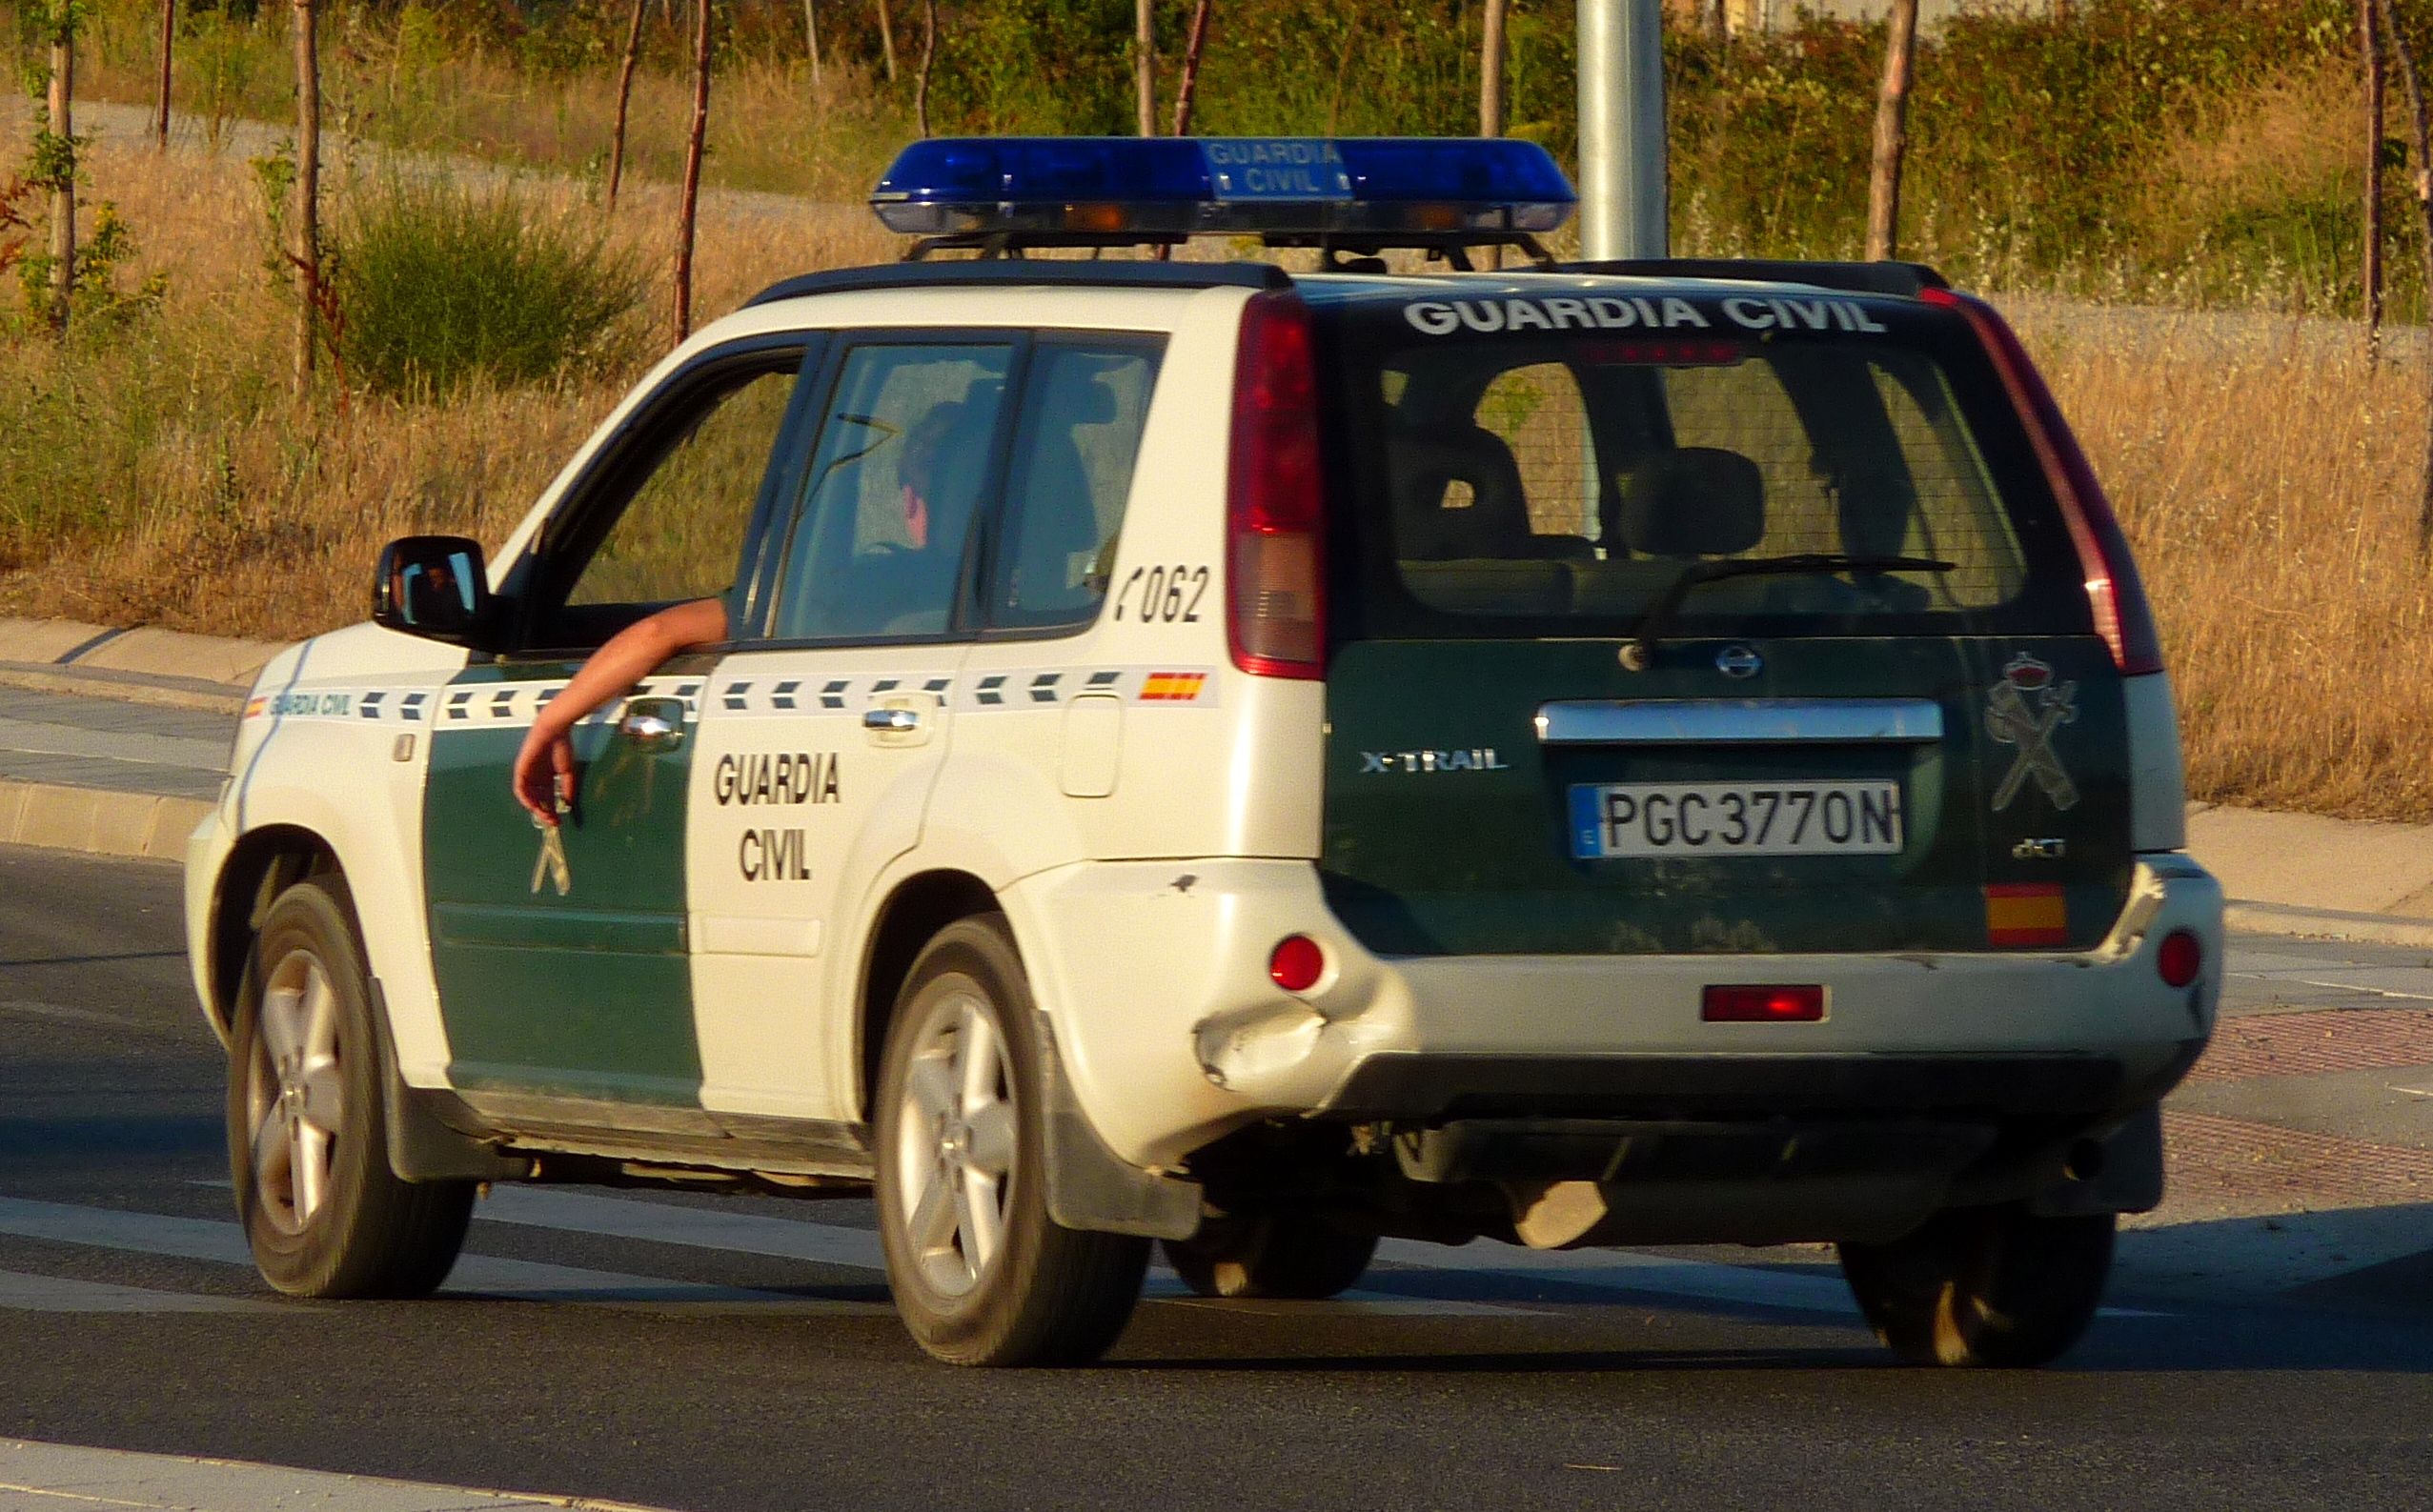 Guàrdia Civil identifica el vehicle infractor / Wikimedia Commons